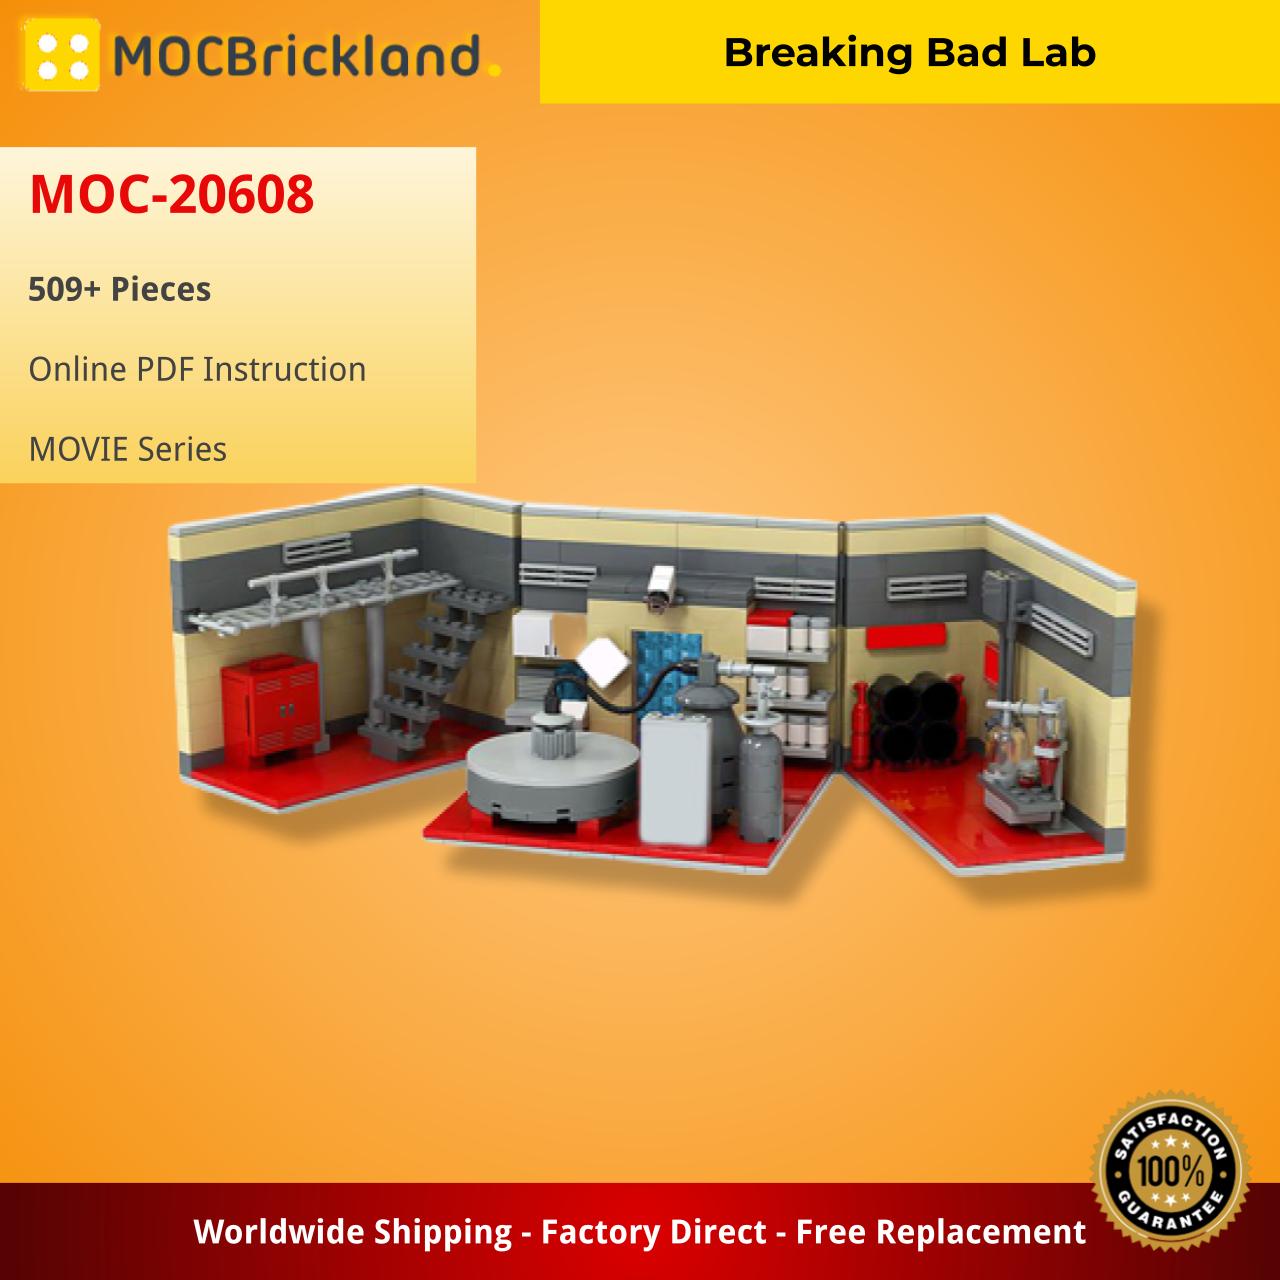 MOCBRICKLAND MOC-20608 Breaking Bad Lab